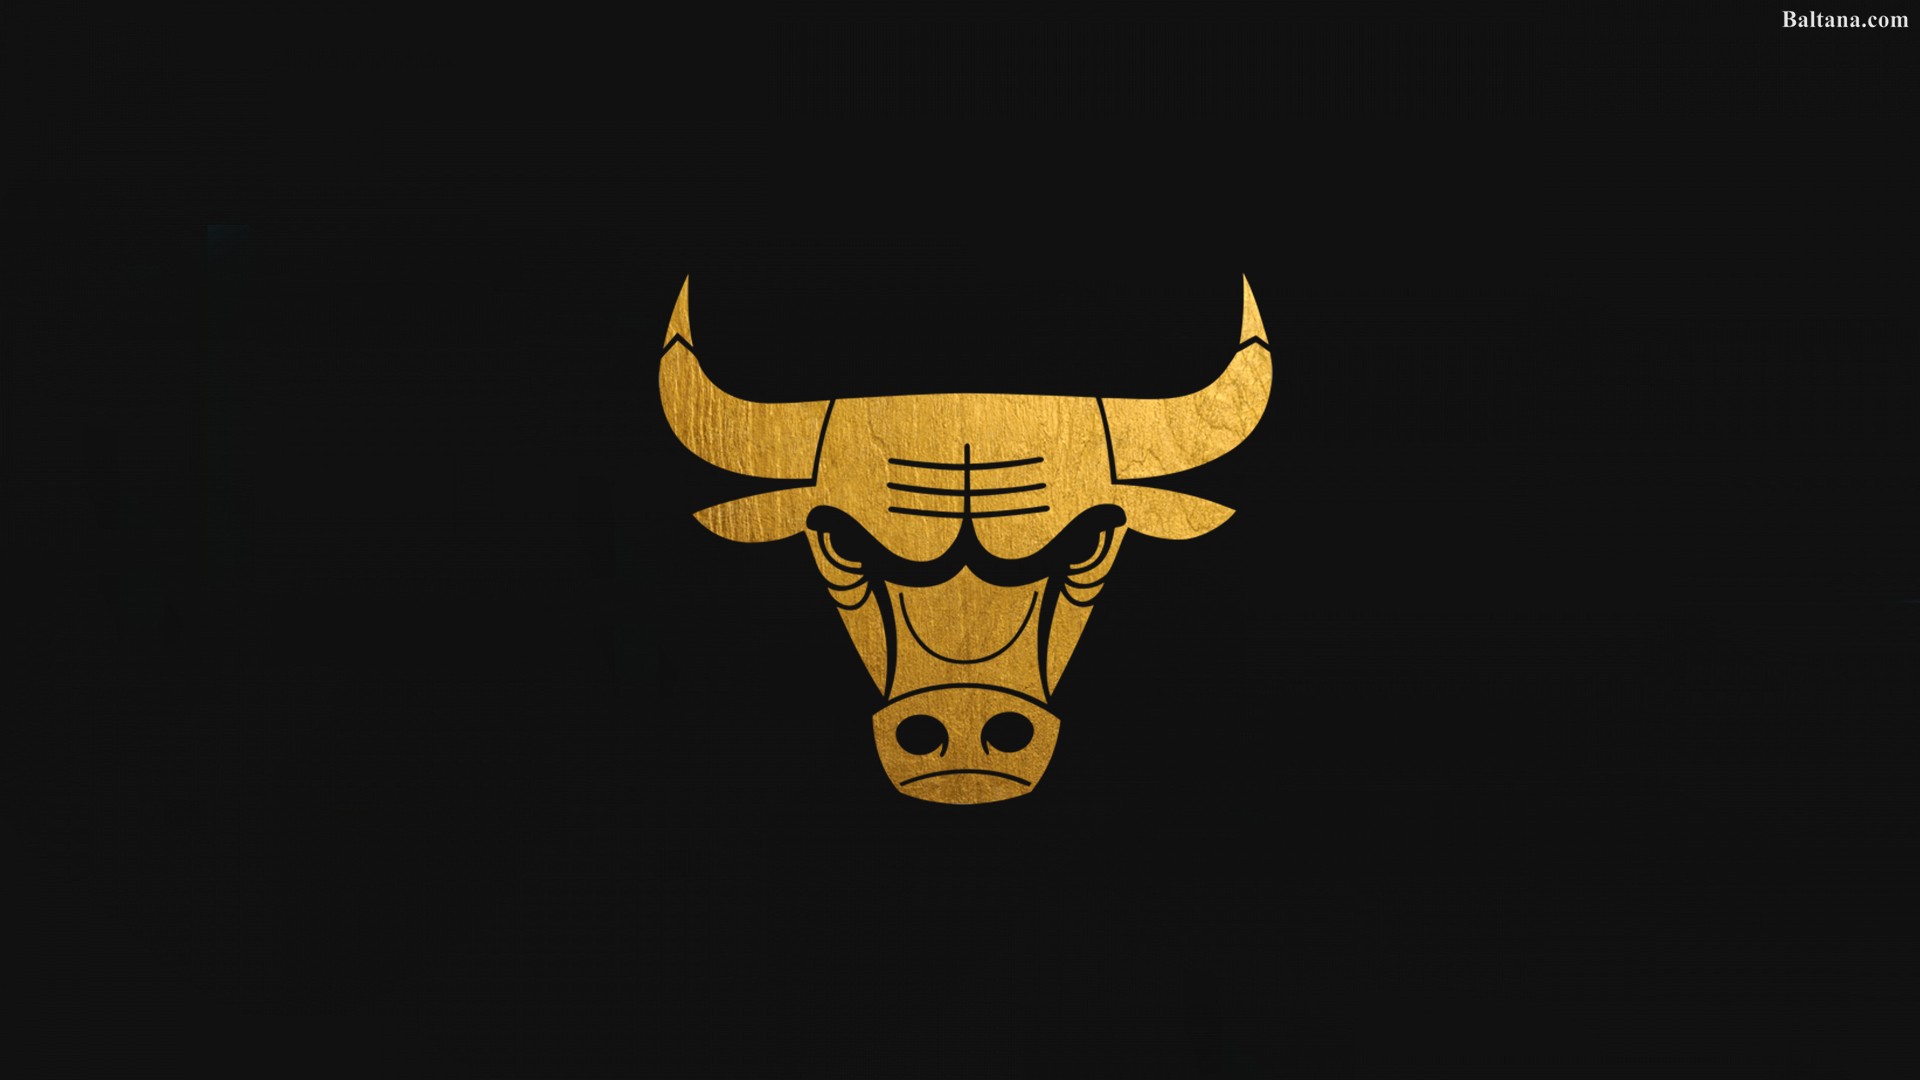 Chicago Bulls Desktop Wallpaper Baltana